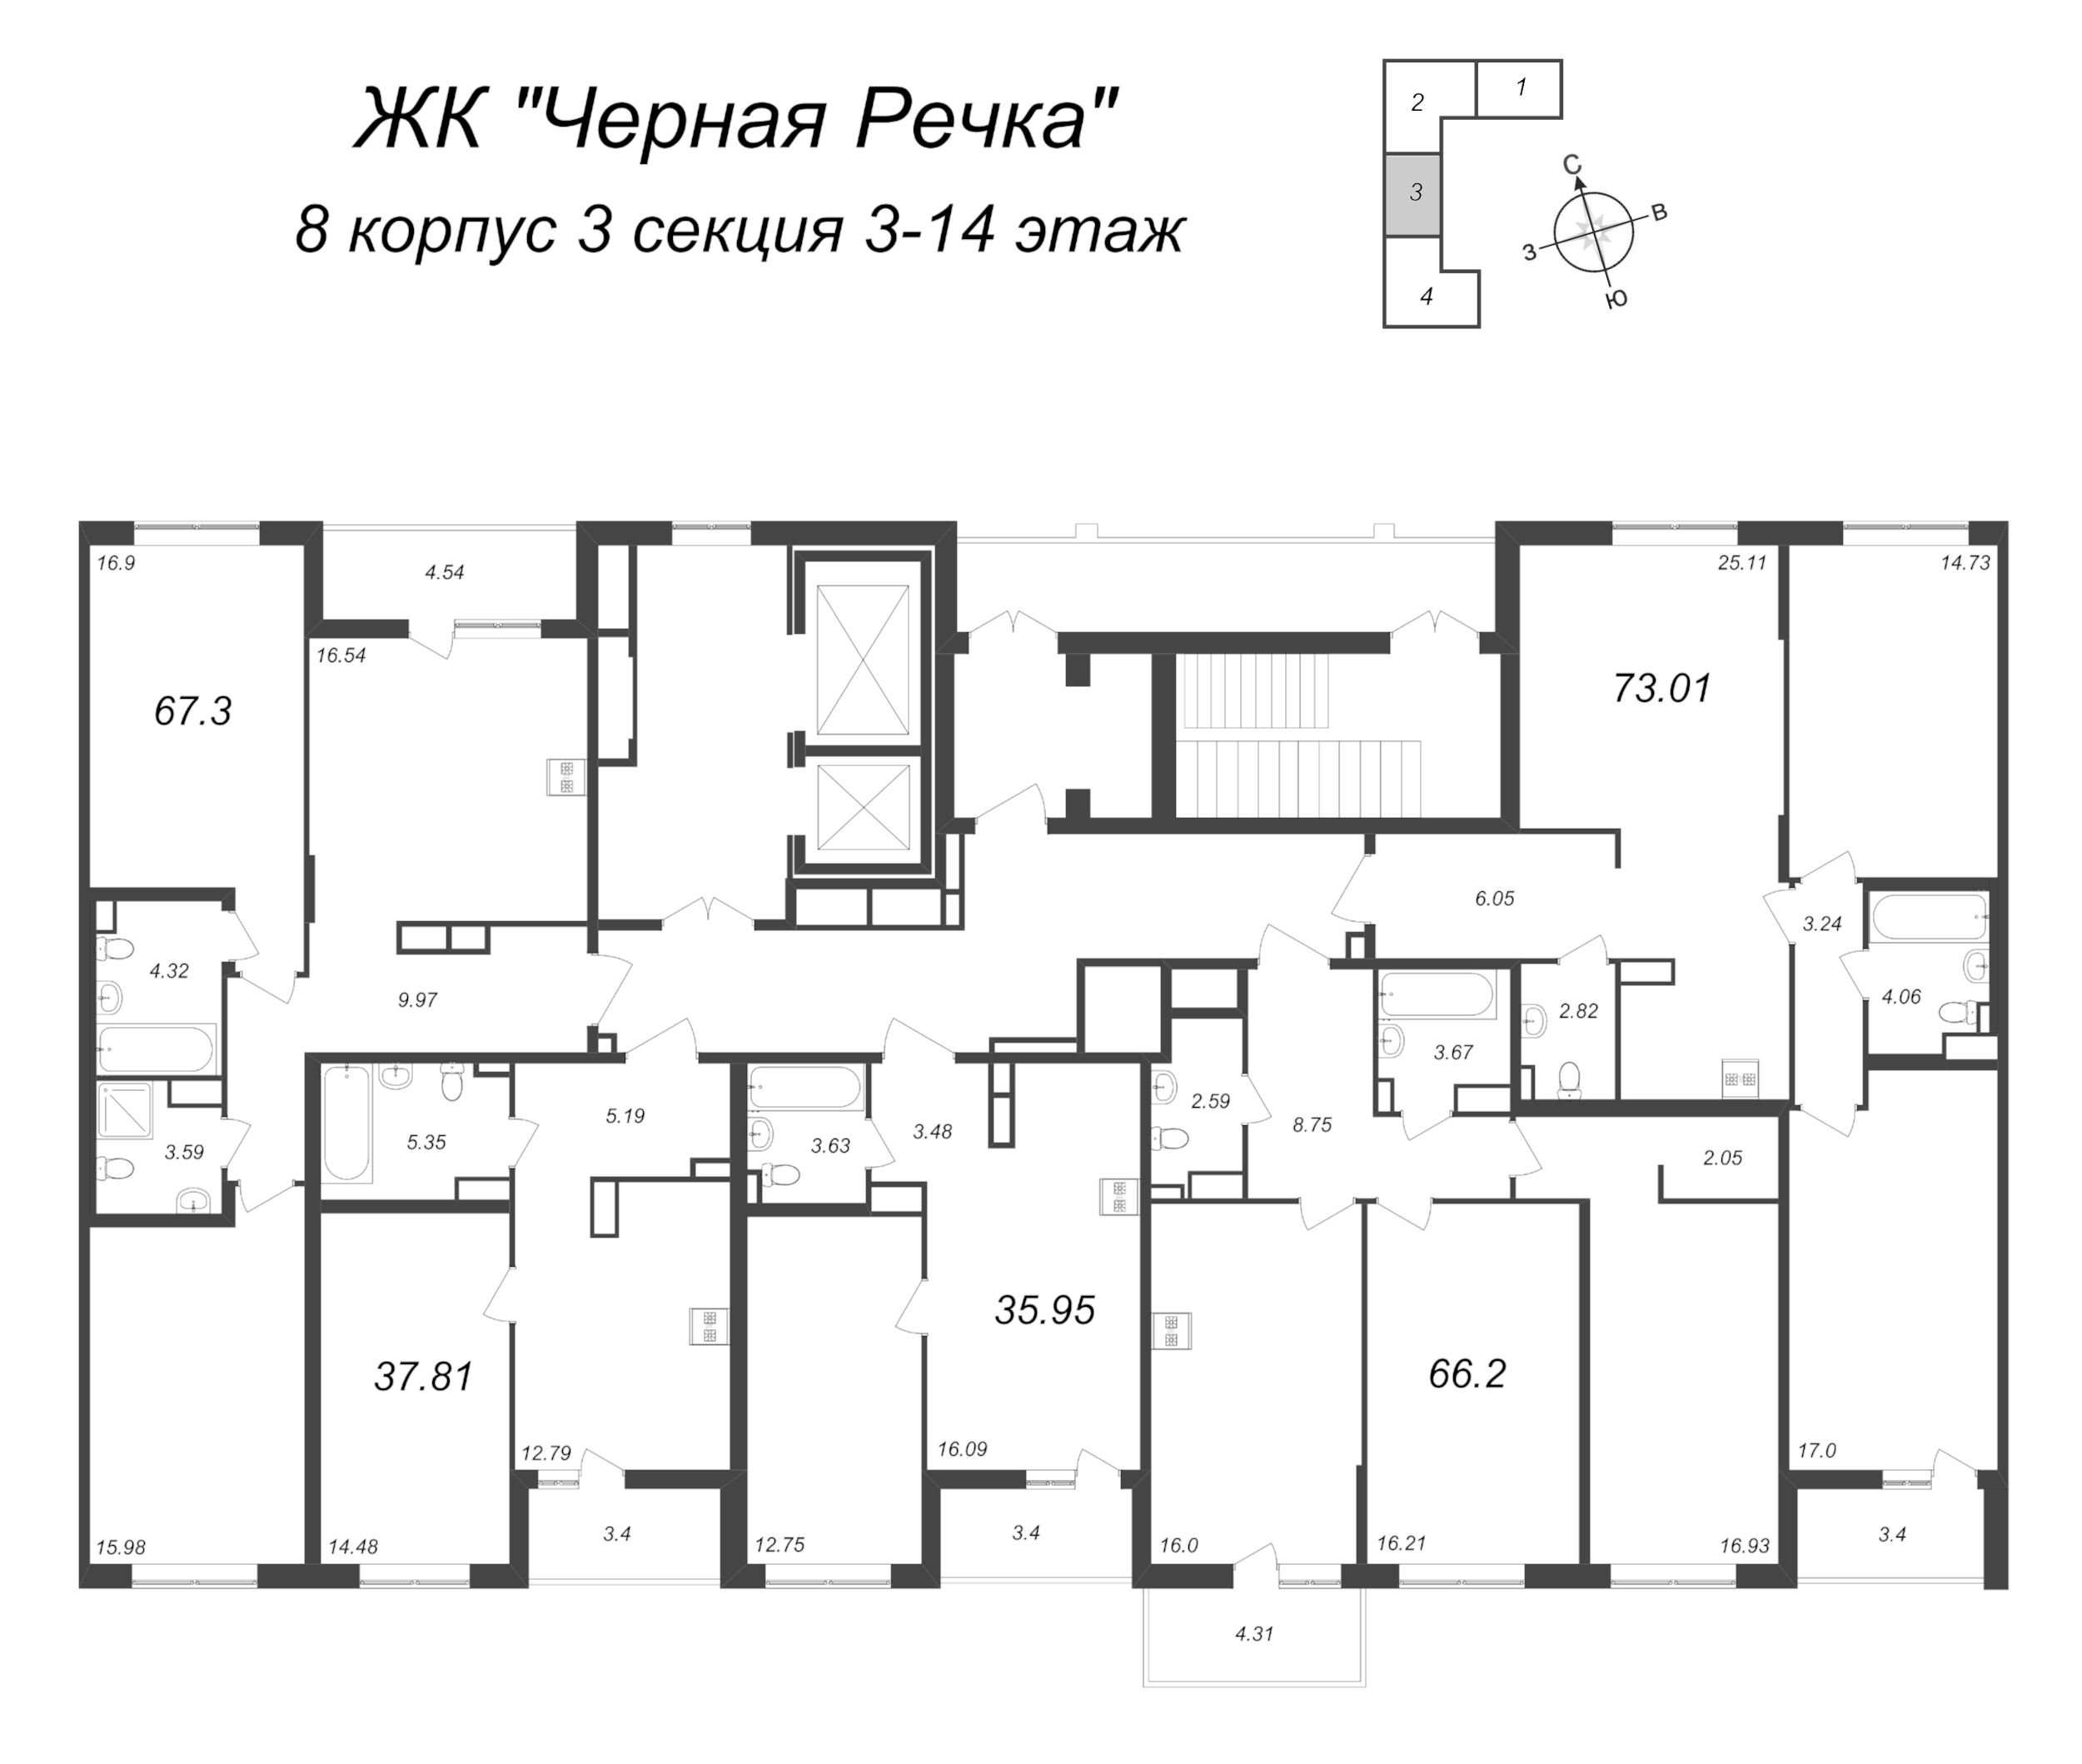 3-комнатная (Евро) квартира, 73.01 м² - планировка этажа